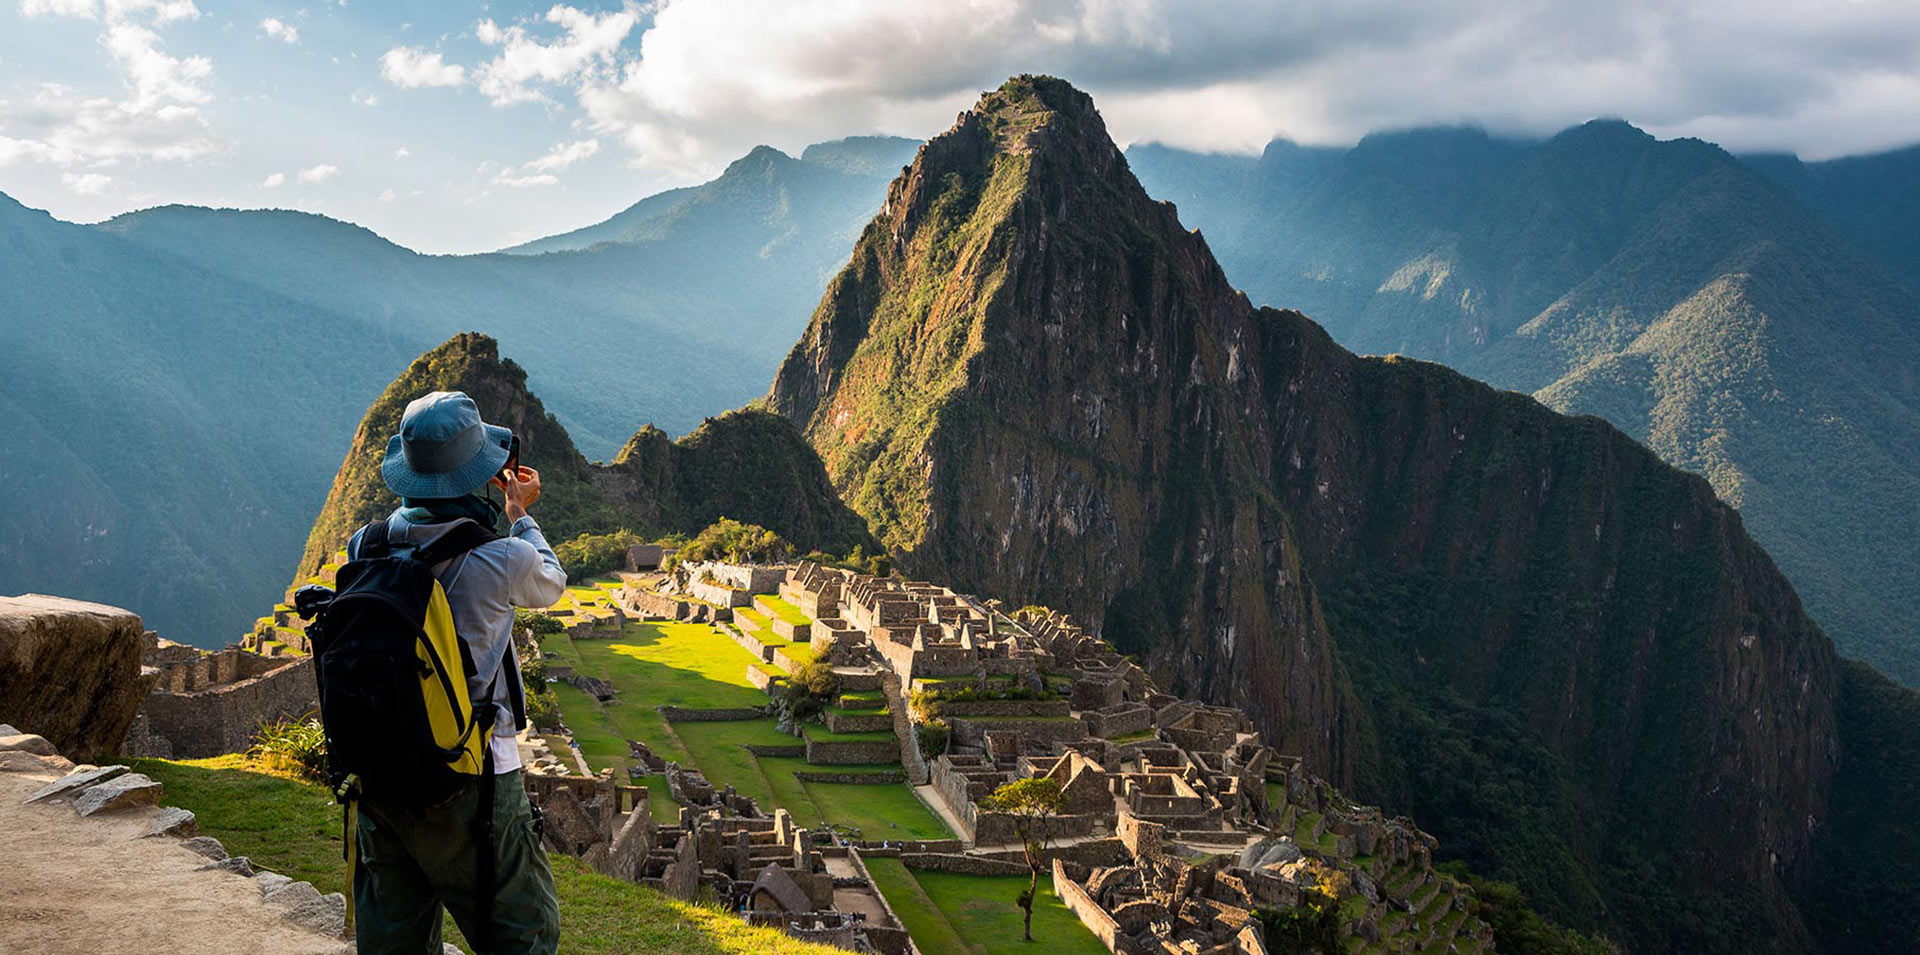 Tourist photographing Machu Picchu ancient Inca citadel